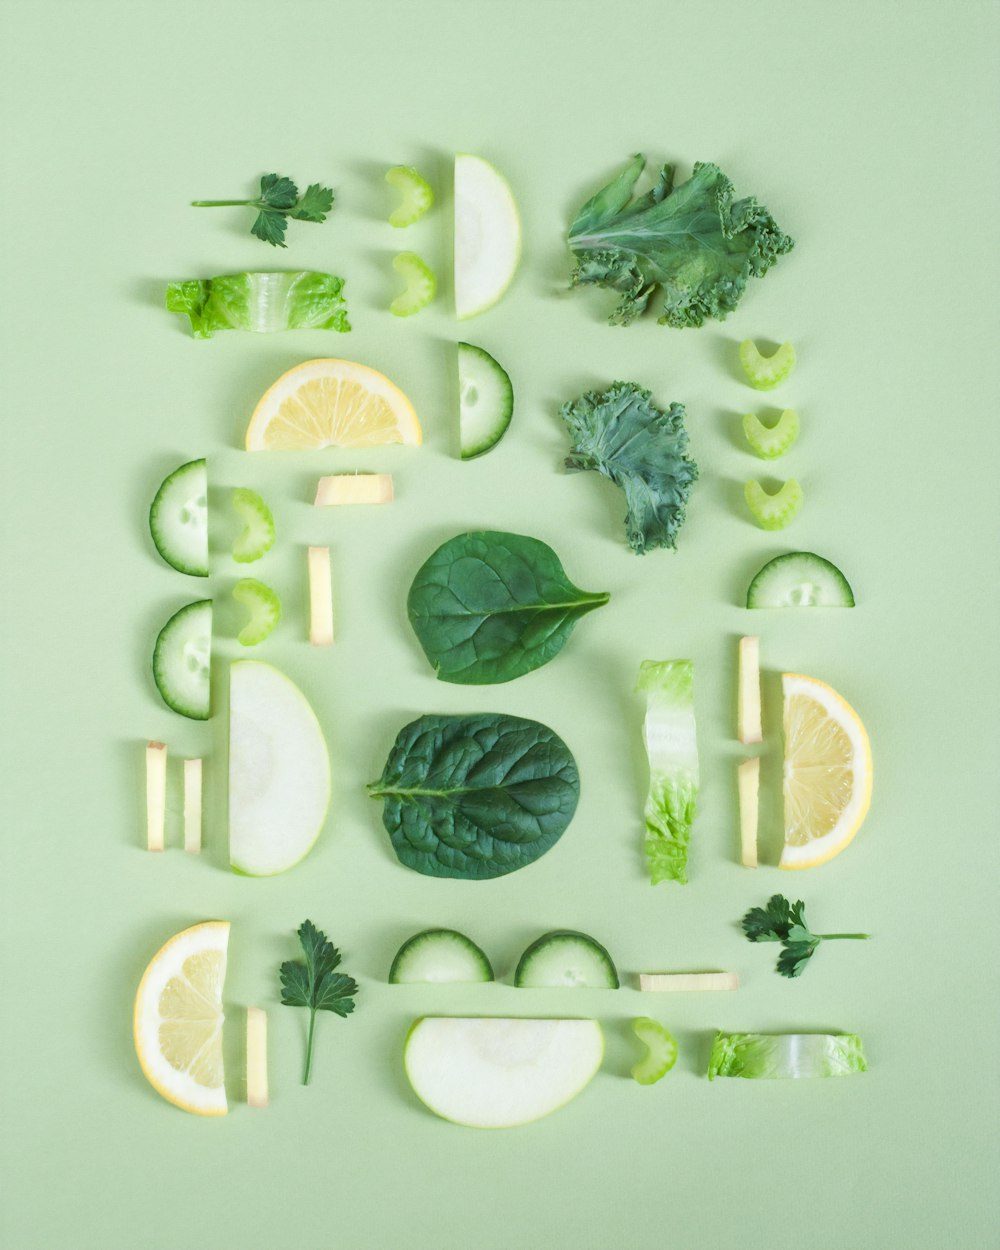 Green Vegetables Pictures | Download Free Images on Unsplash